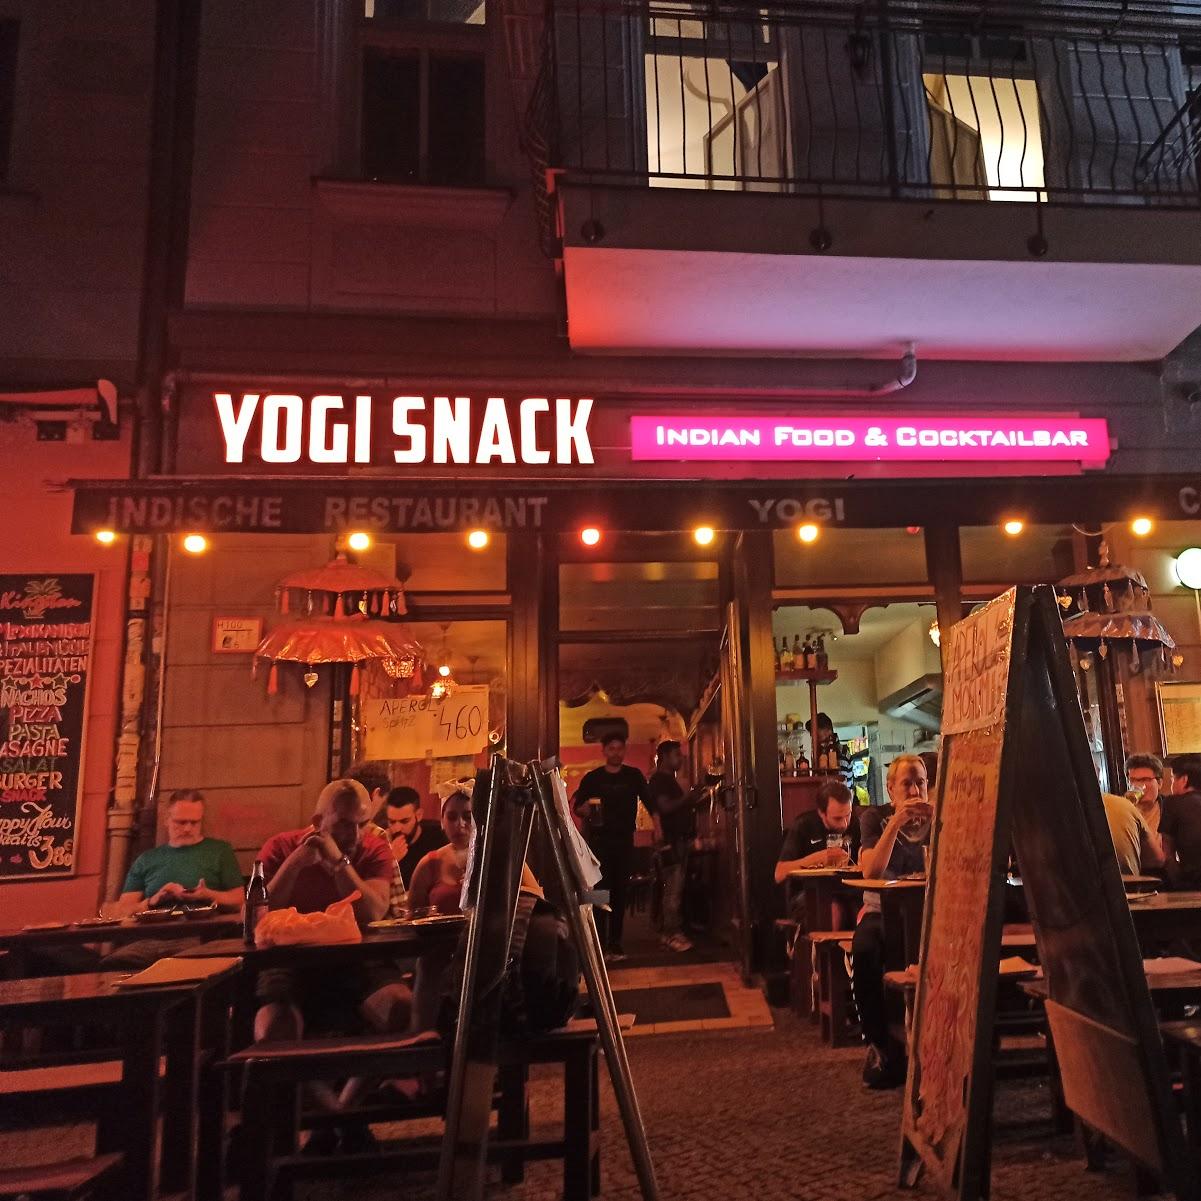 Restaurant "Yogi Snack" in Berlin